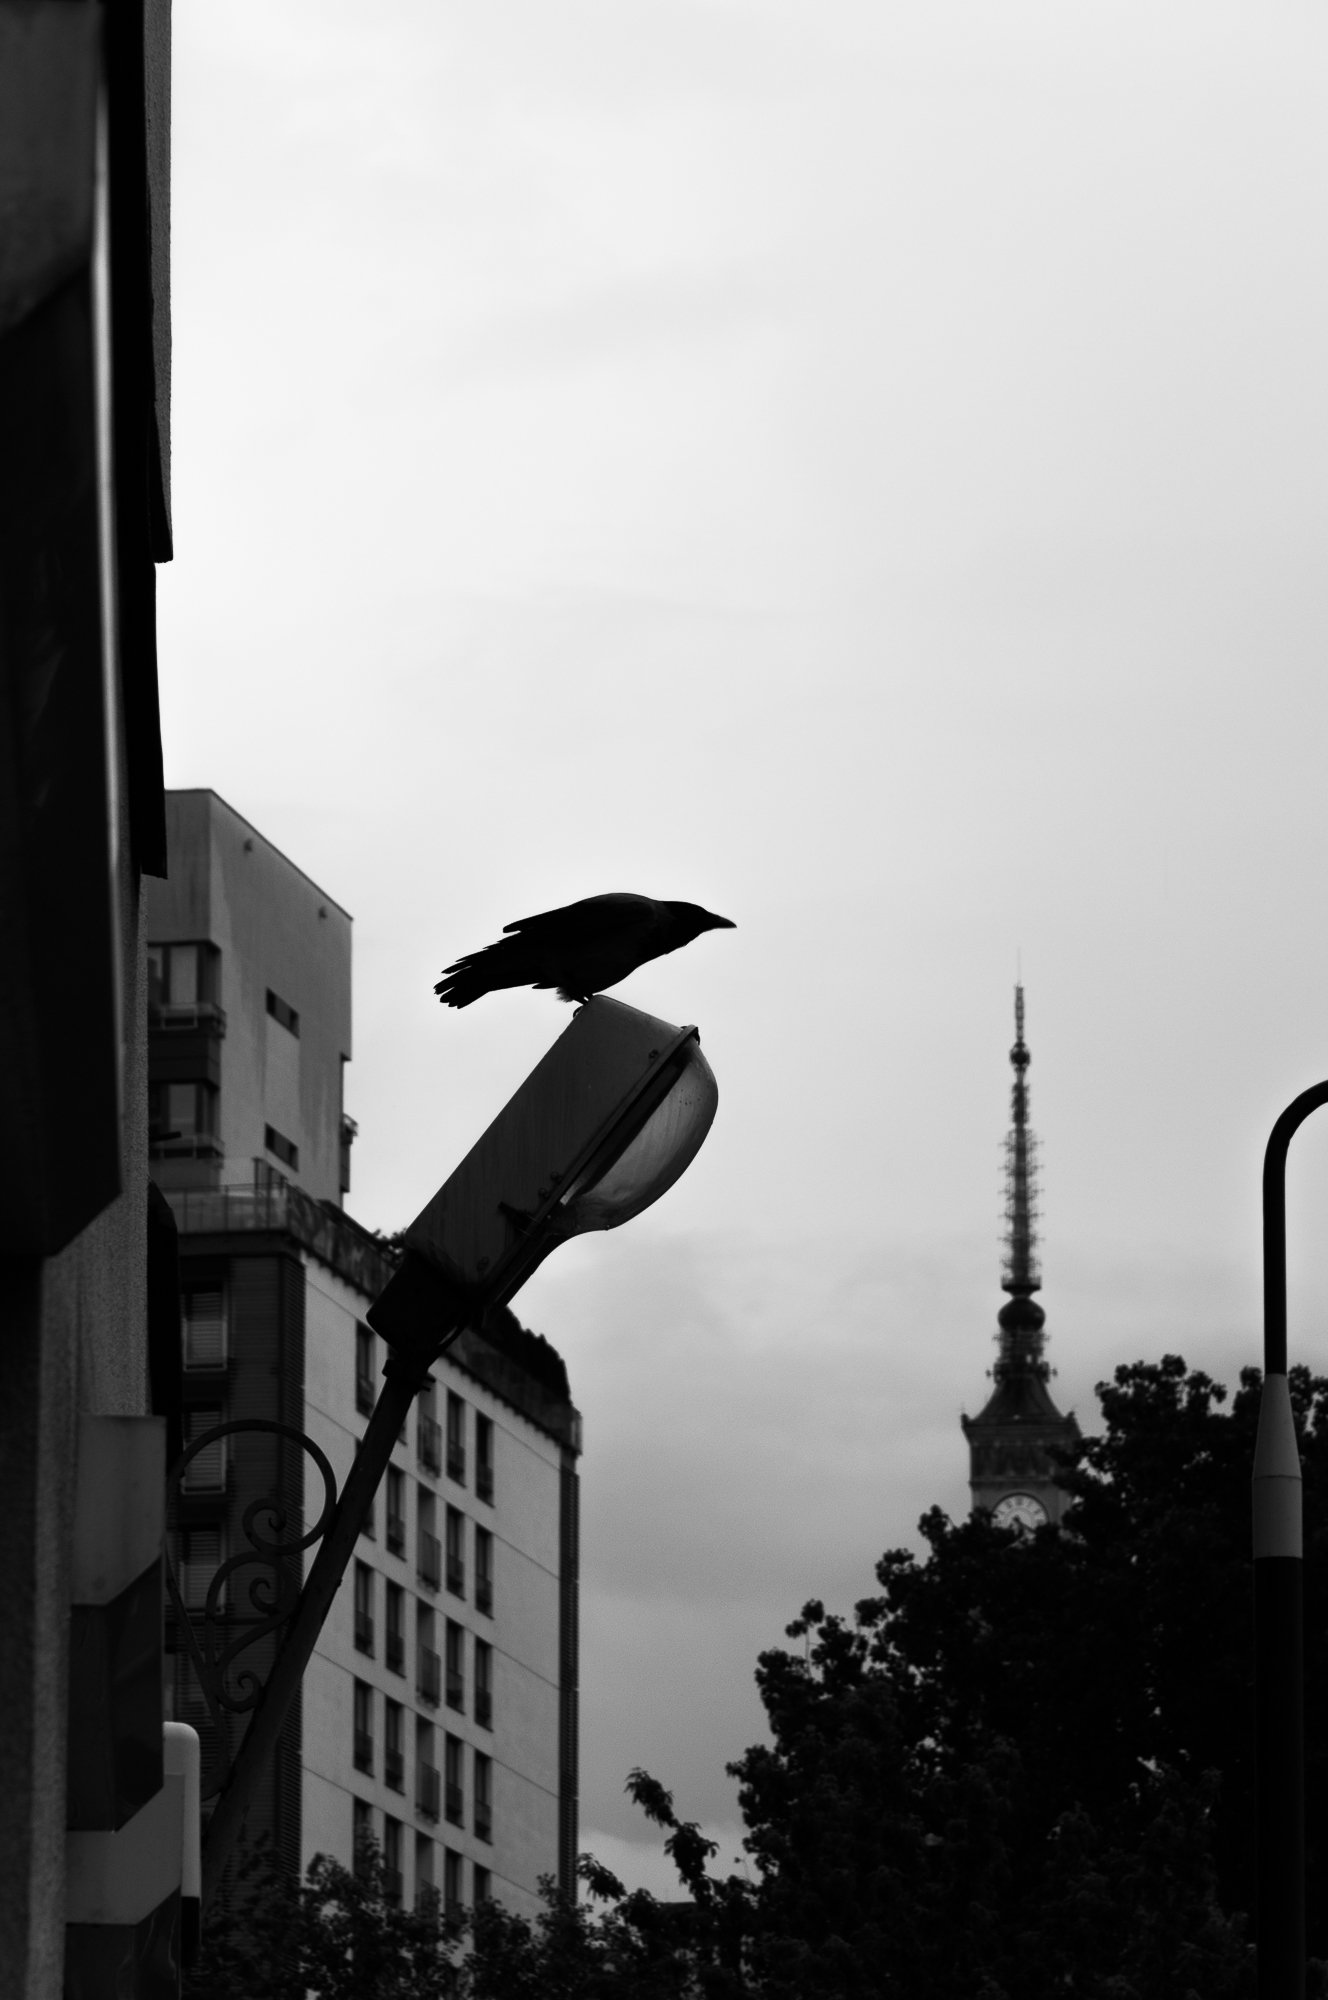 Adam Mazek Photography Warsaw (Warszawa) 2020. Post: "Compatibility." Minimalism. Bird on the street lamp.